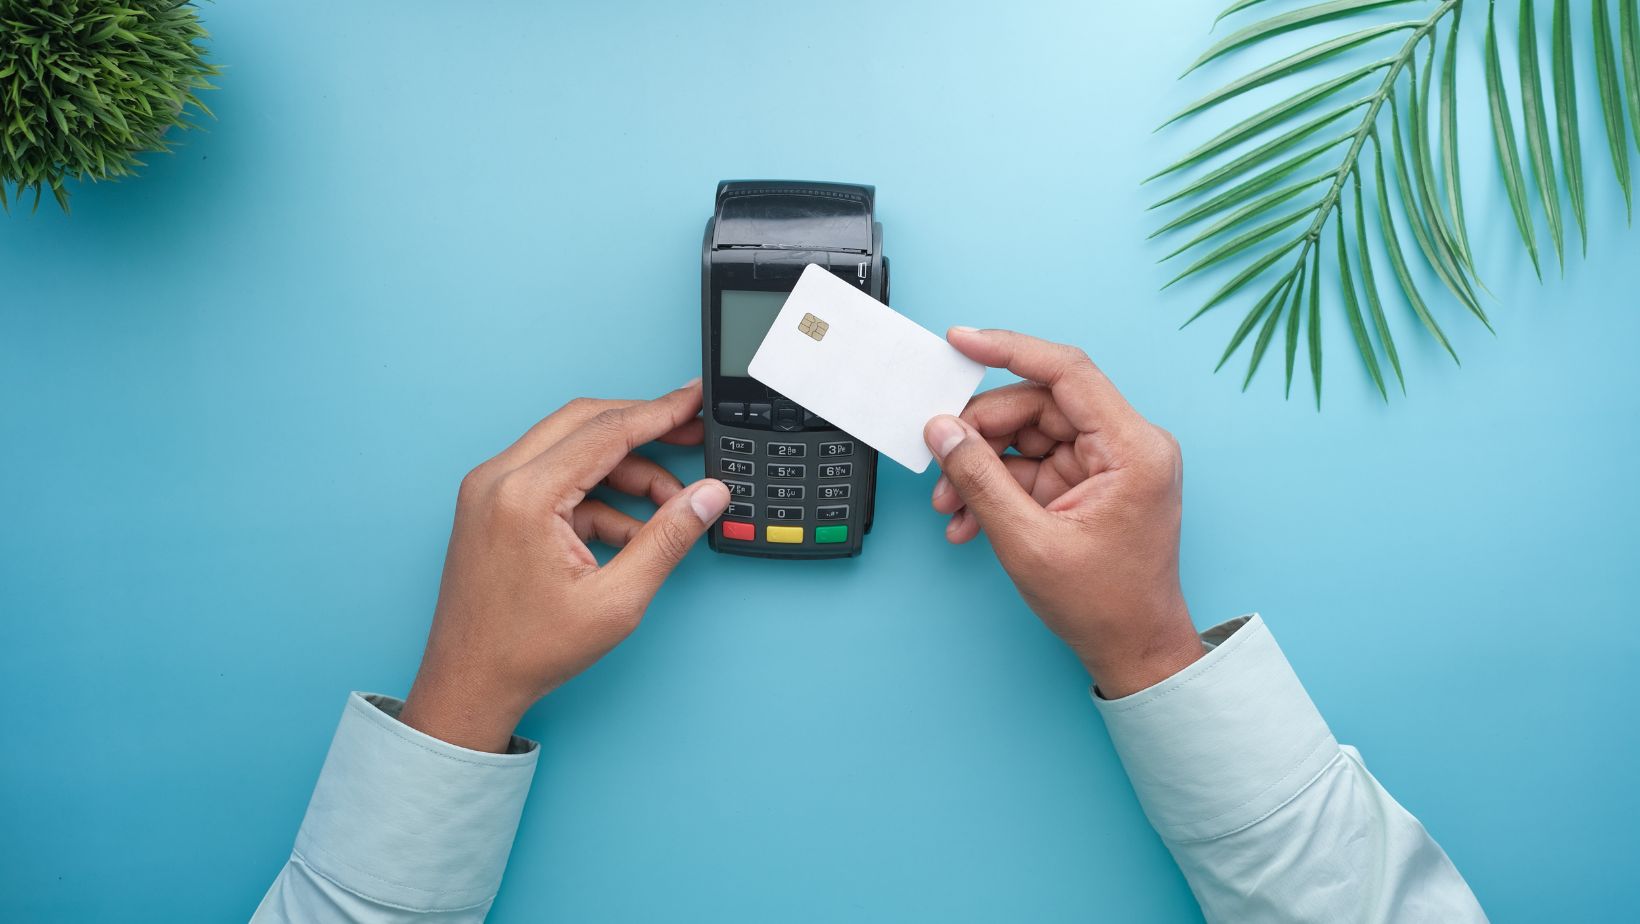 tjmaxx credit card payment synchrony